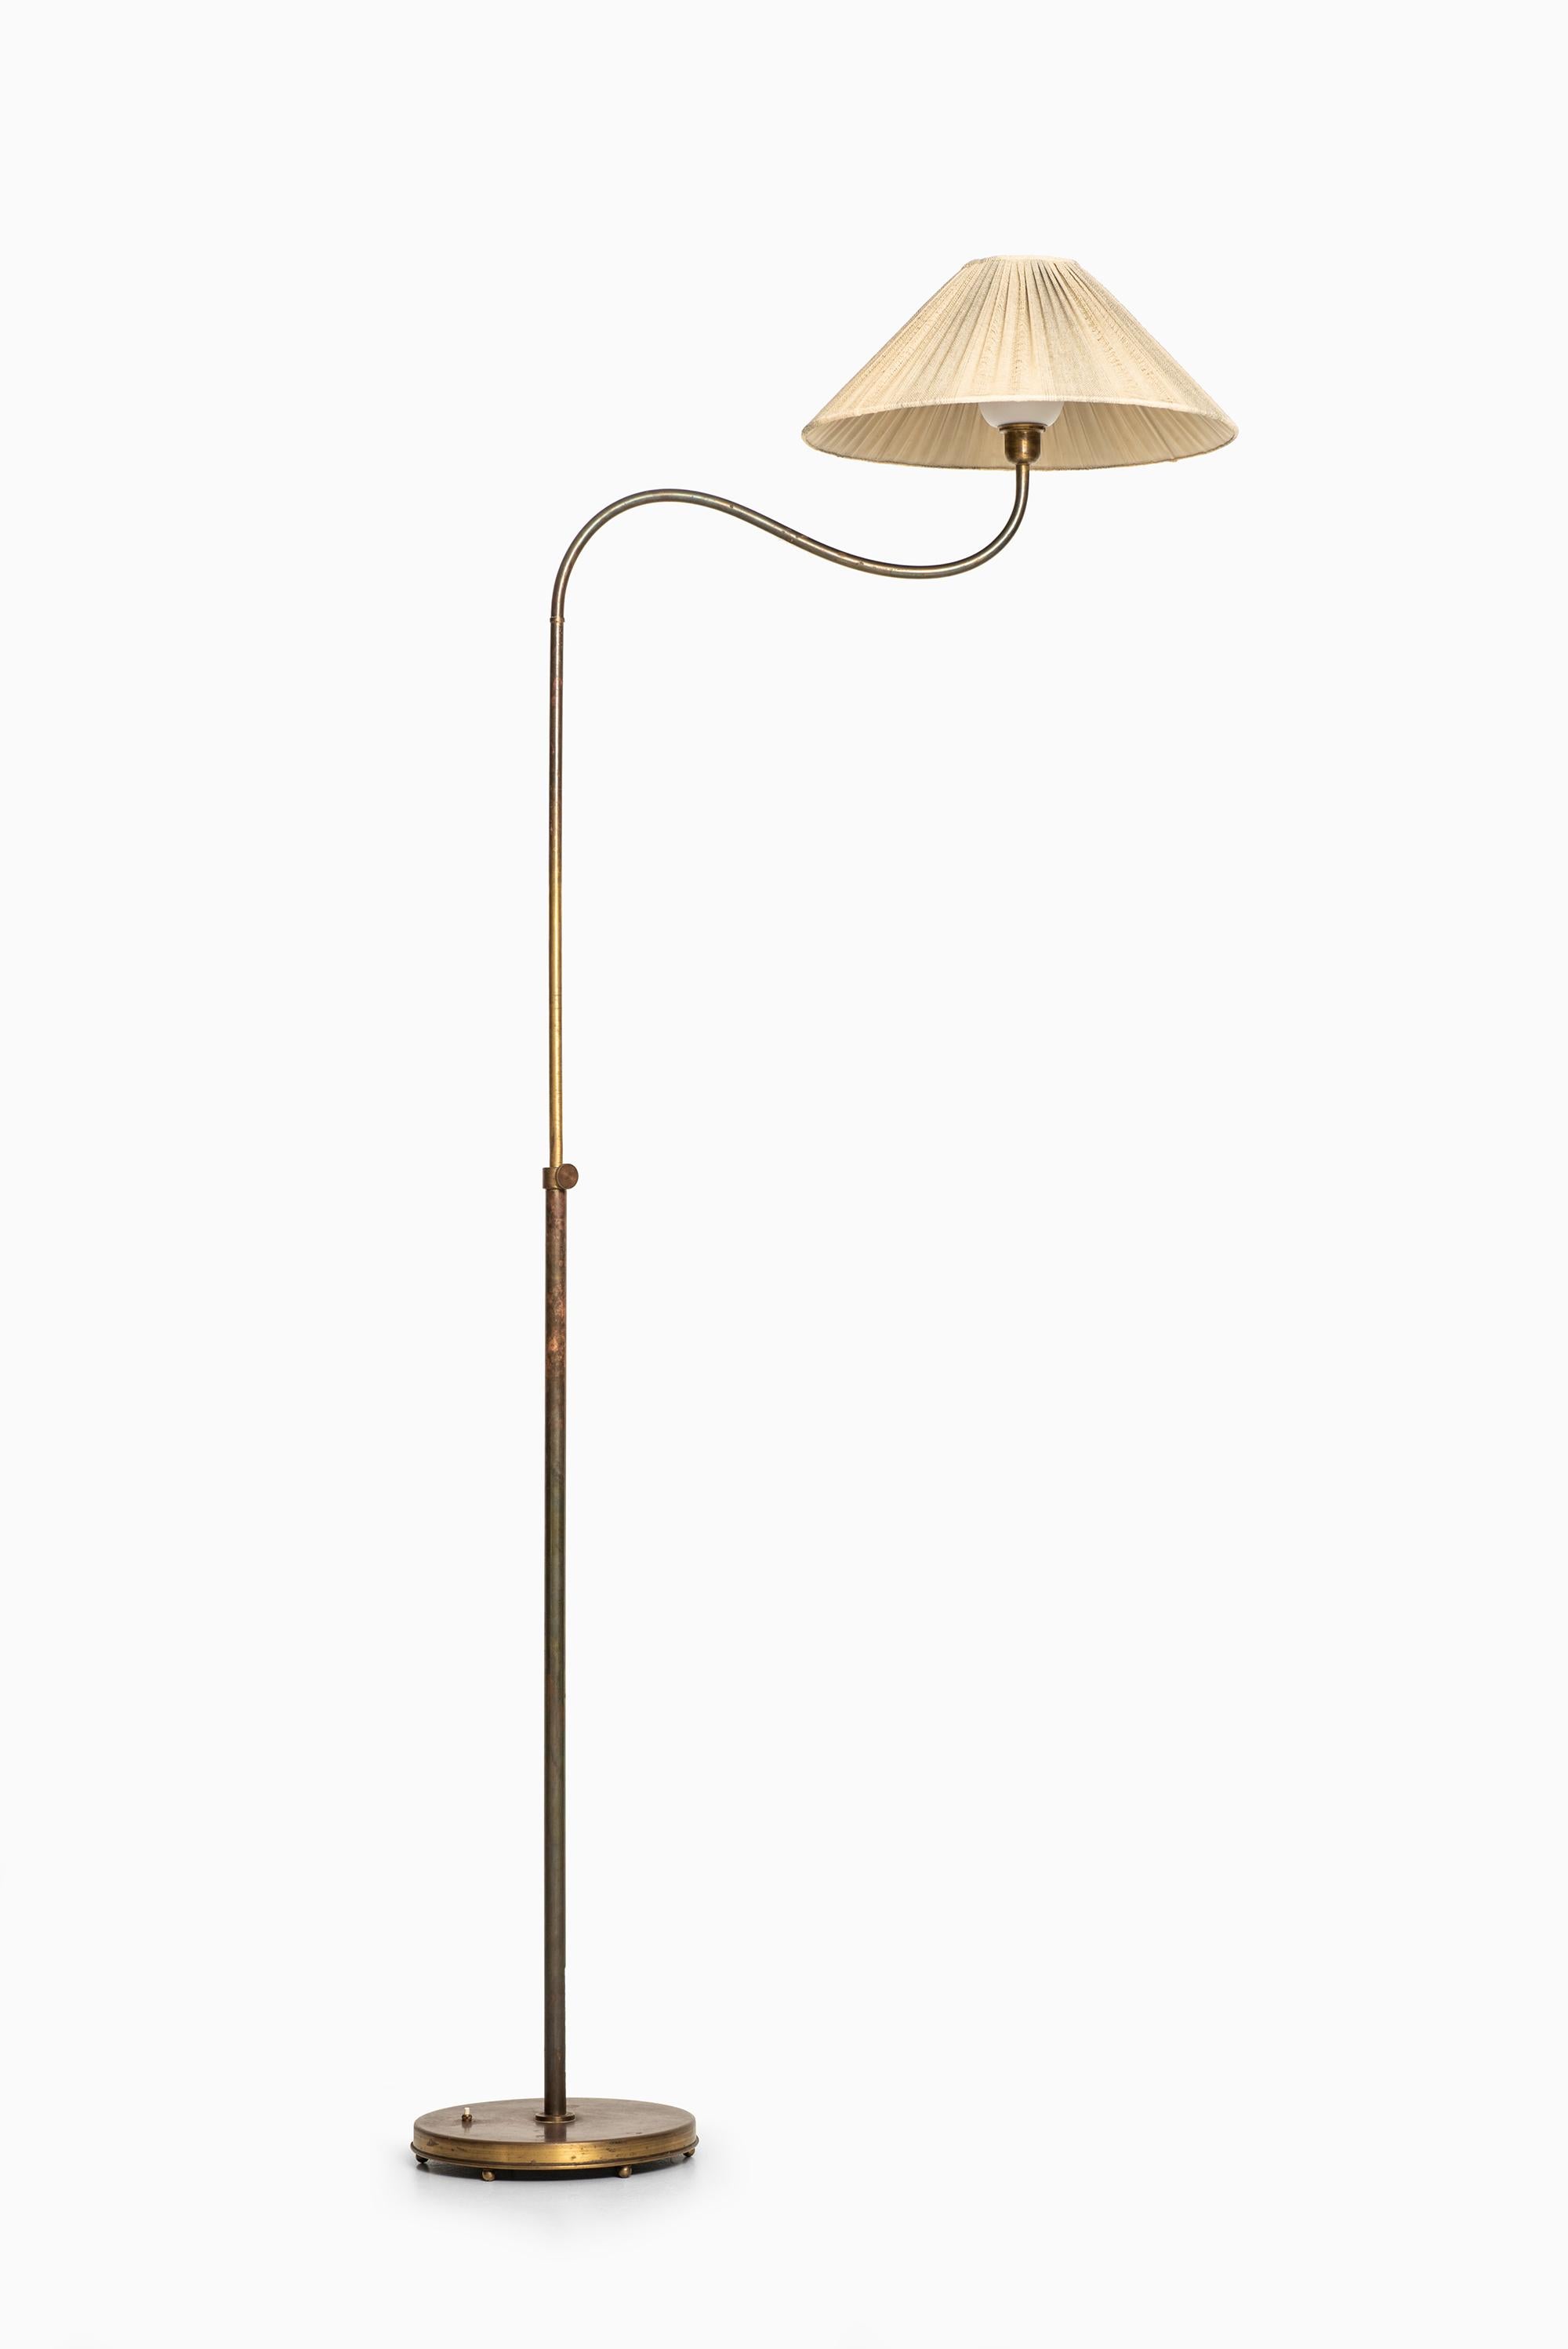 Mid-20th Century Josef Frank Early Floor Lamp Produced by Svenskt Tenn in Sweden